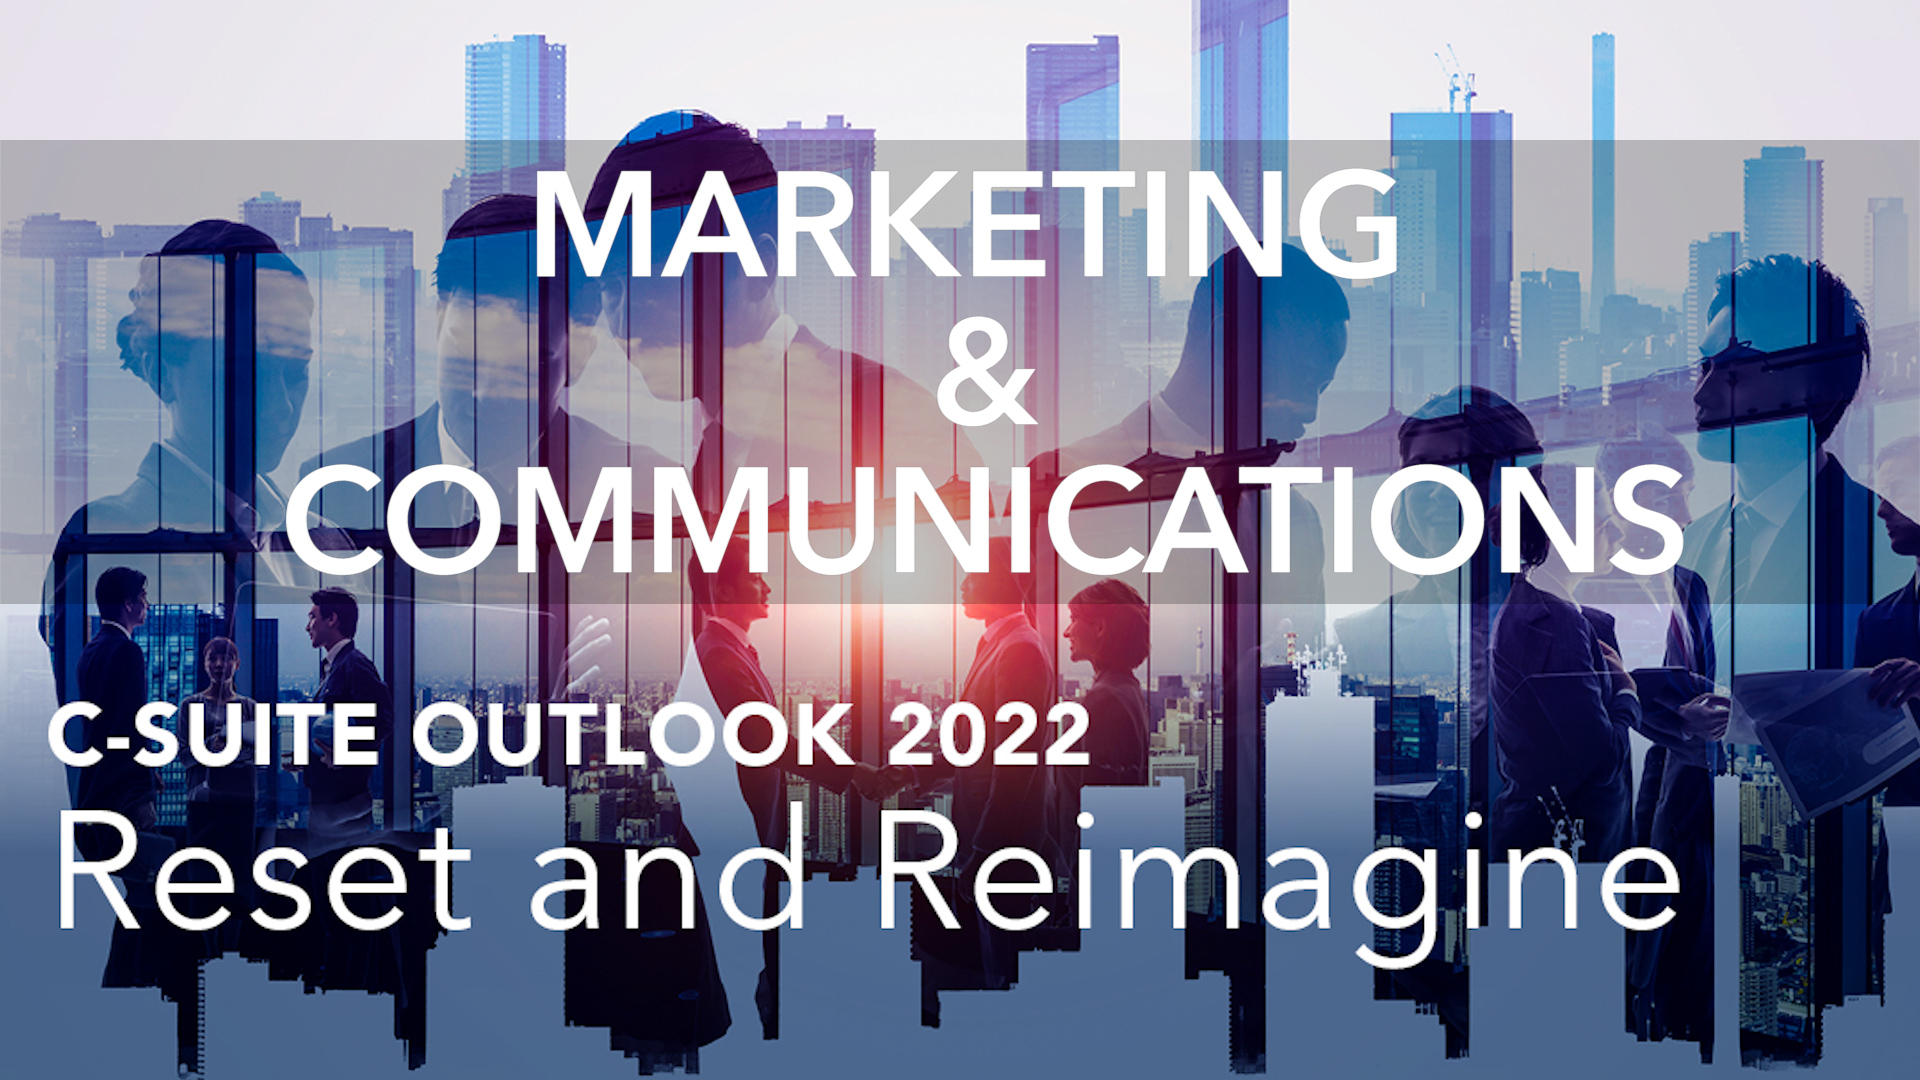 C-Suite Outlook 2022: Marketing & Communications